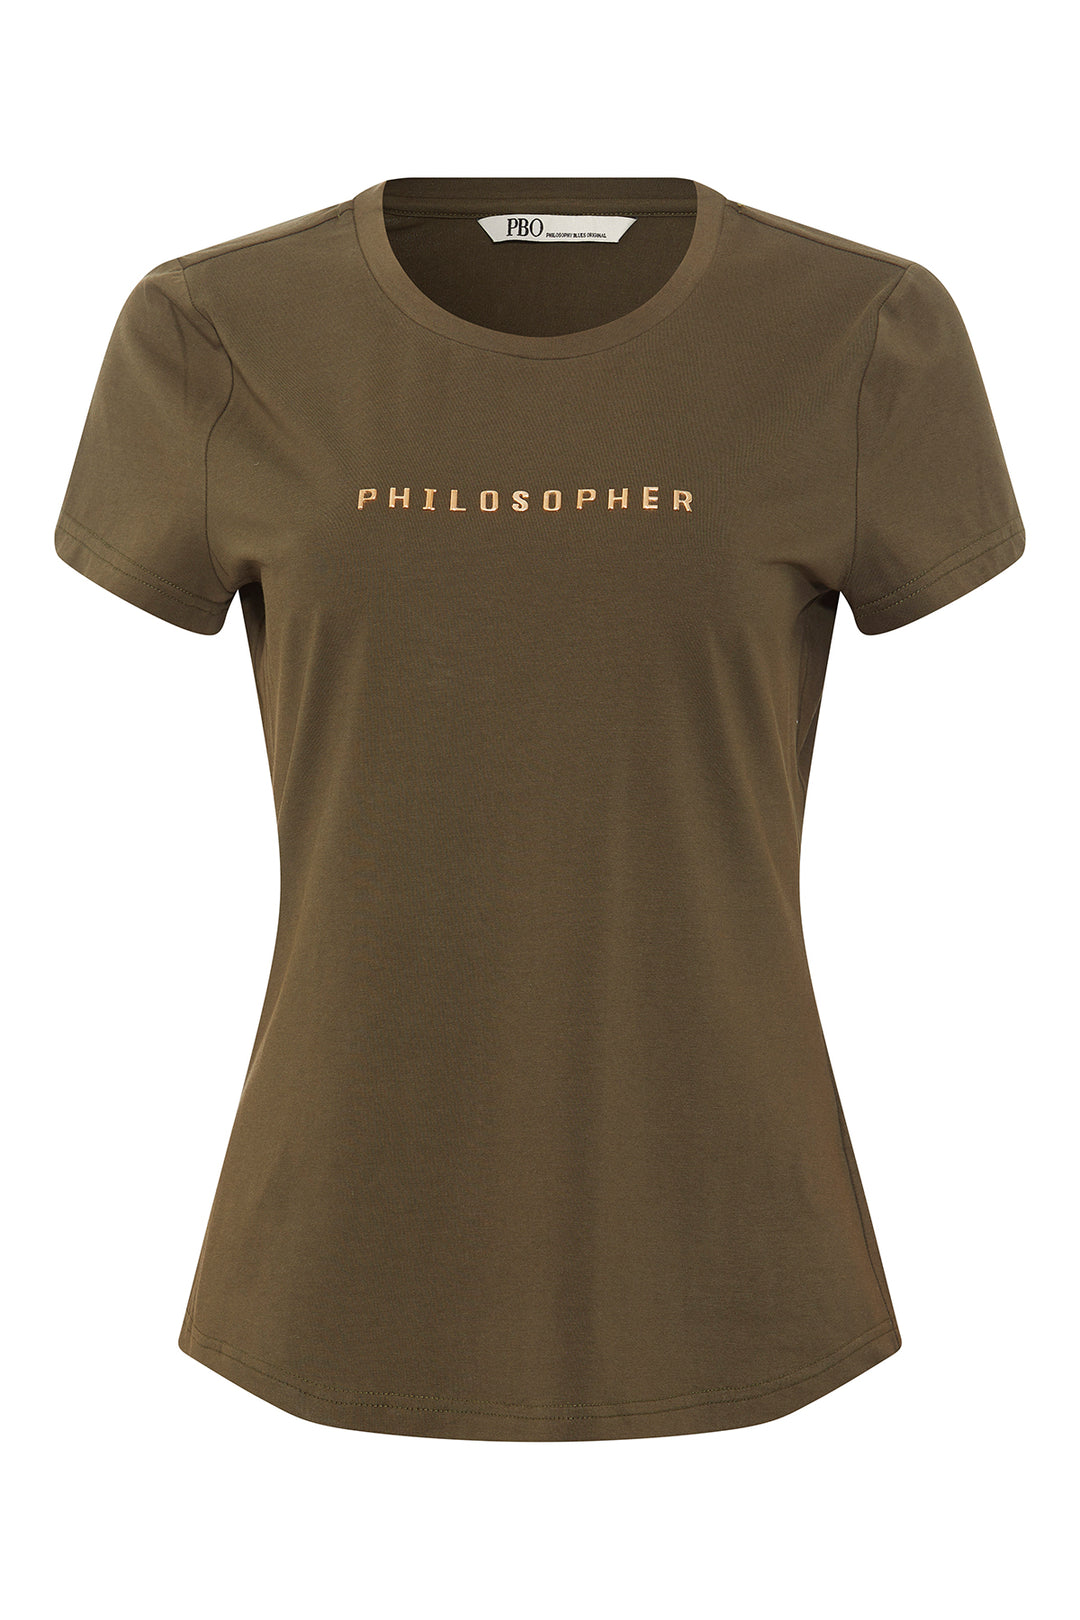 PBO Philosopher T-shirt T-SHIRTS 581 Grape leaf